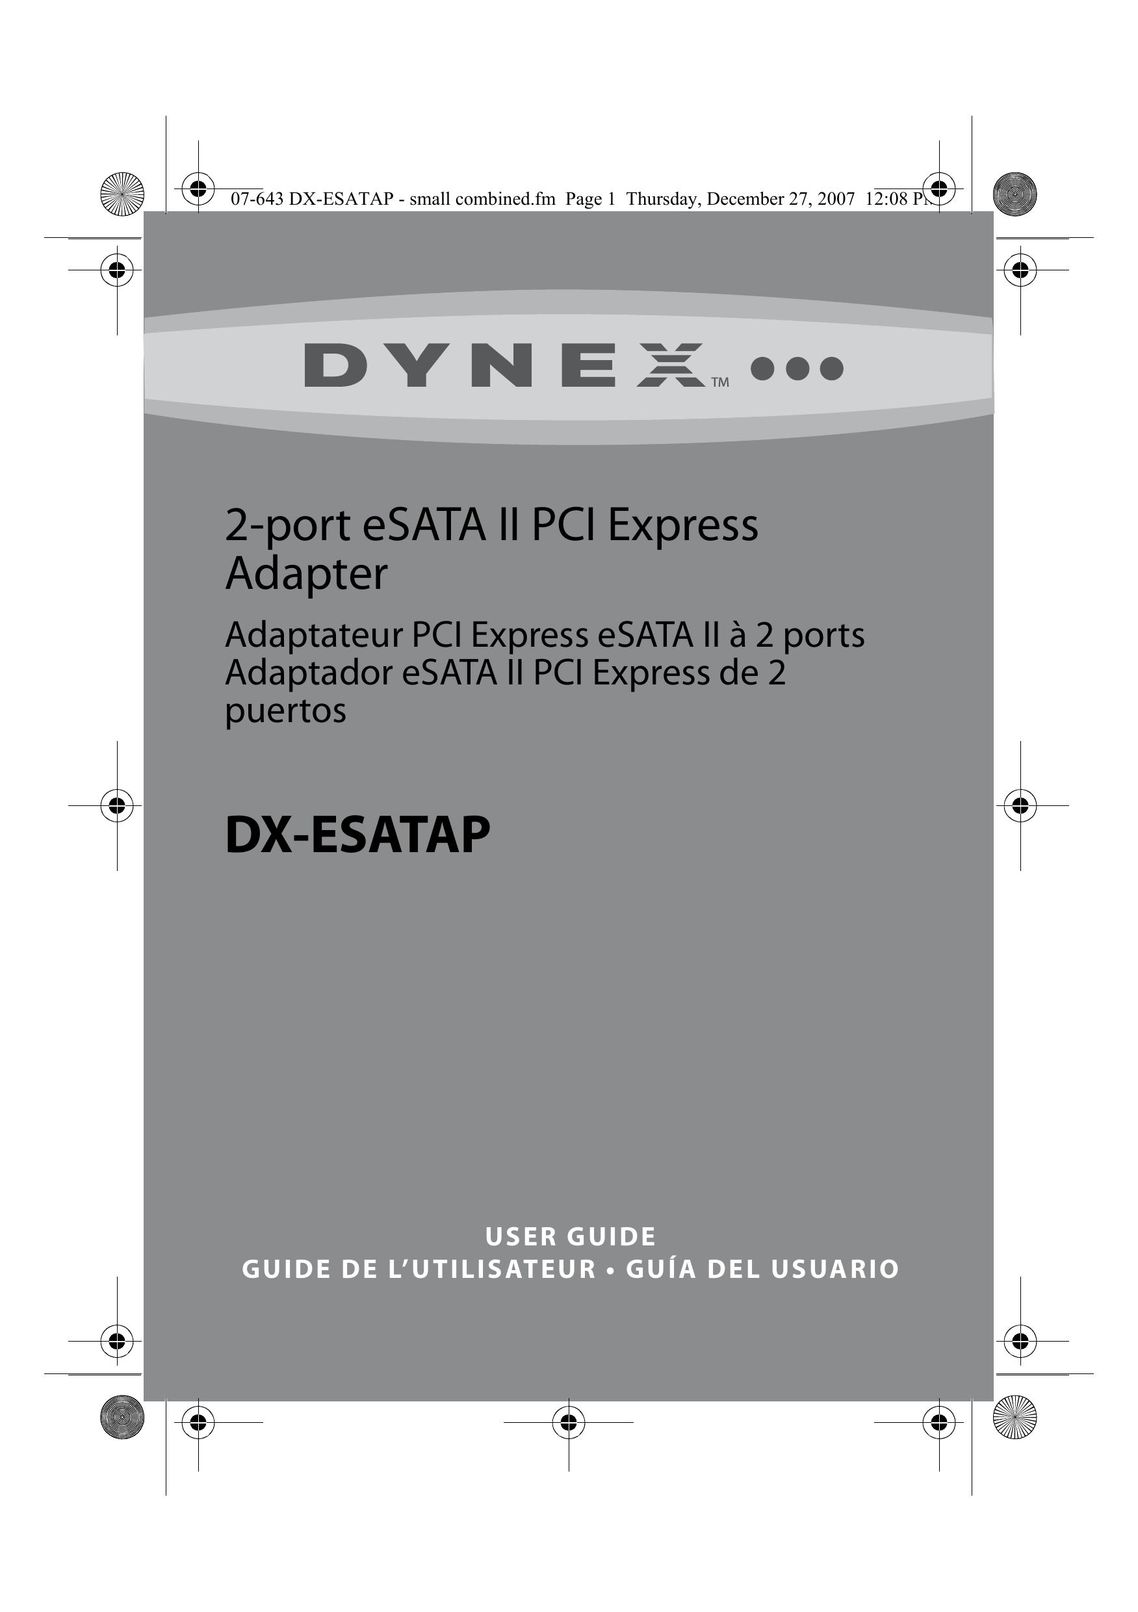 Dynex DX-ESATAP Network Card User Manual (Page 1)